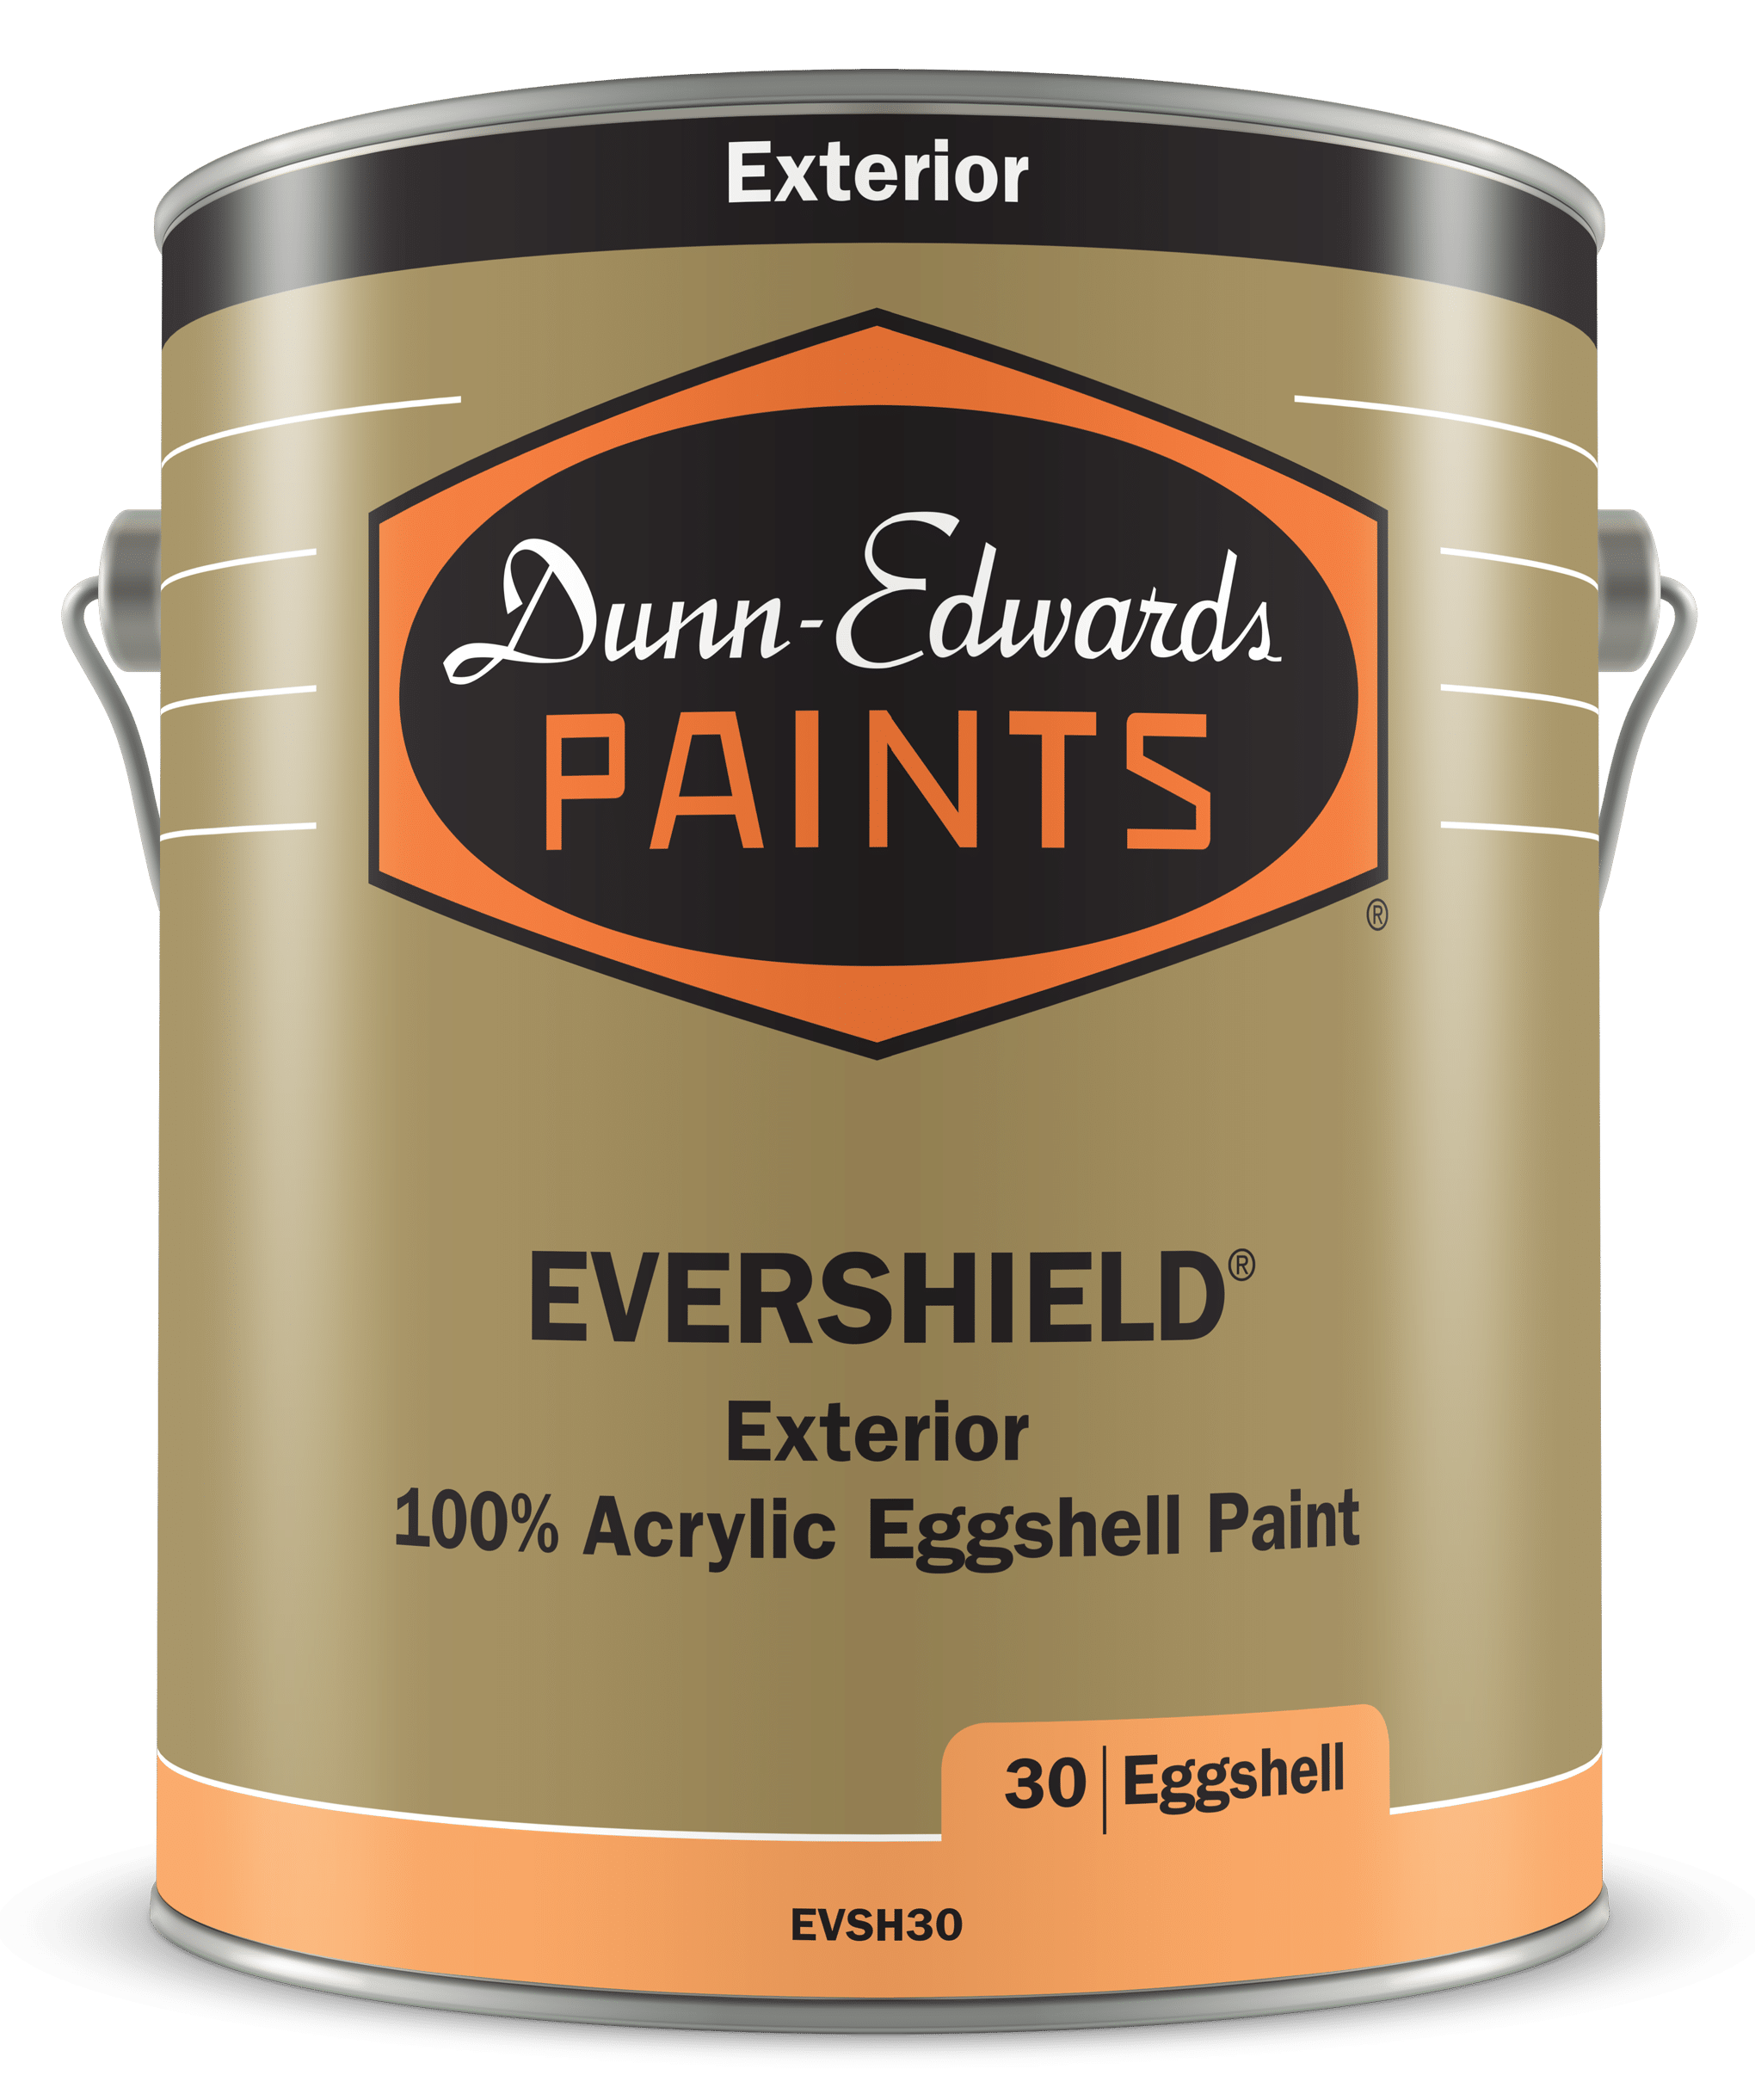 EVERSHIELD Exterior 100% Acrylic Eggshell Paint Can